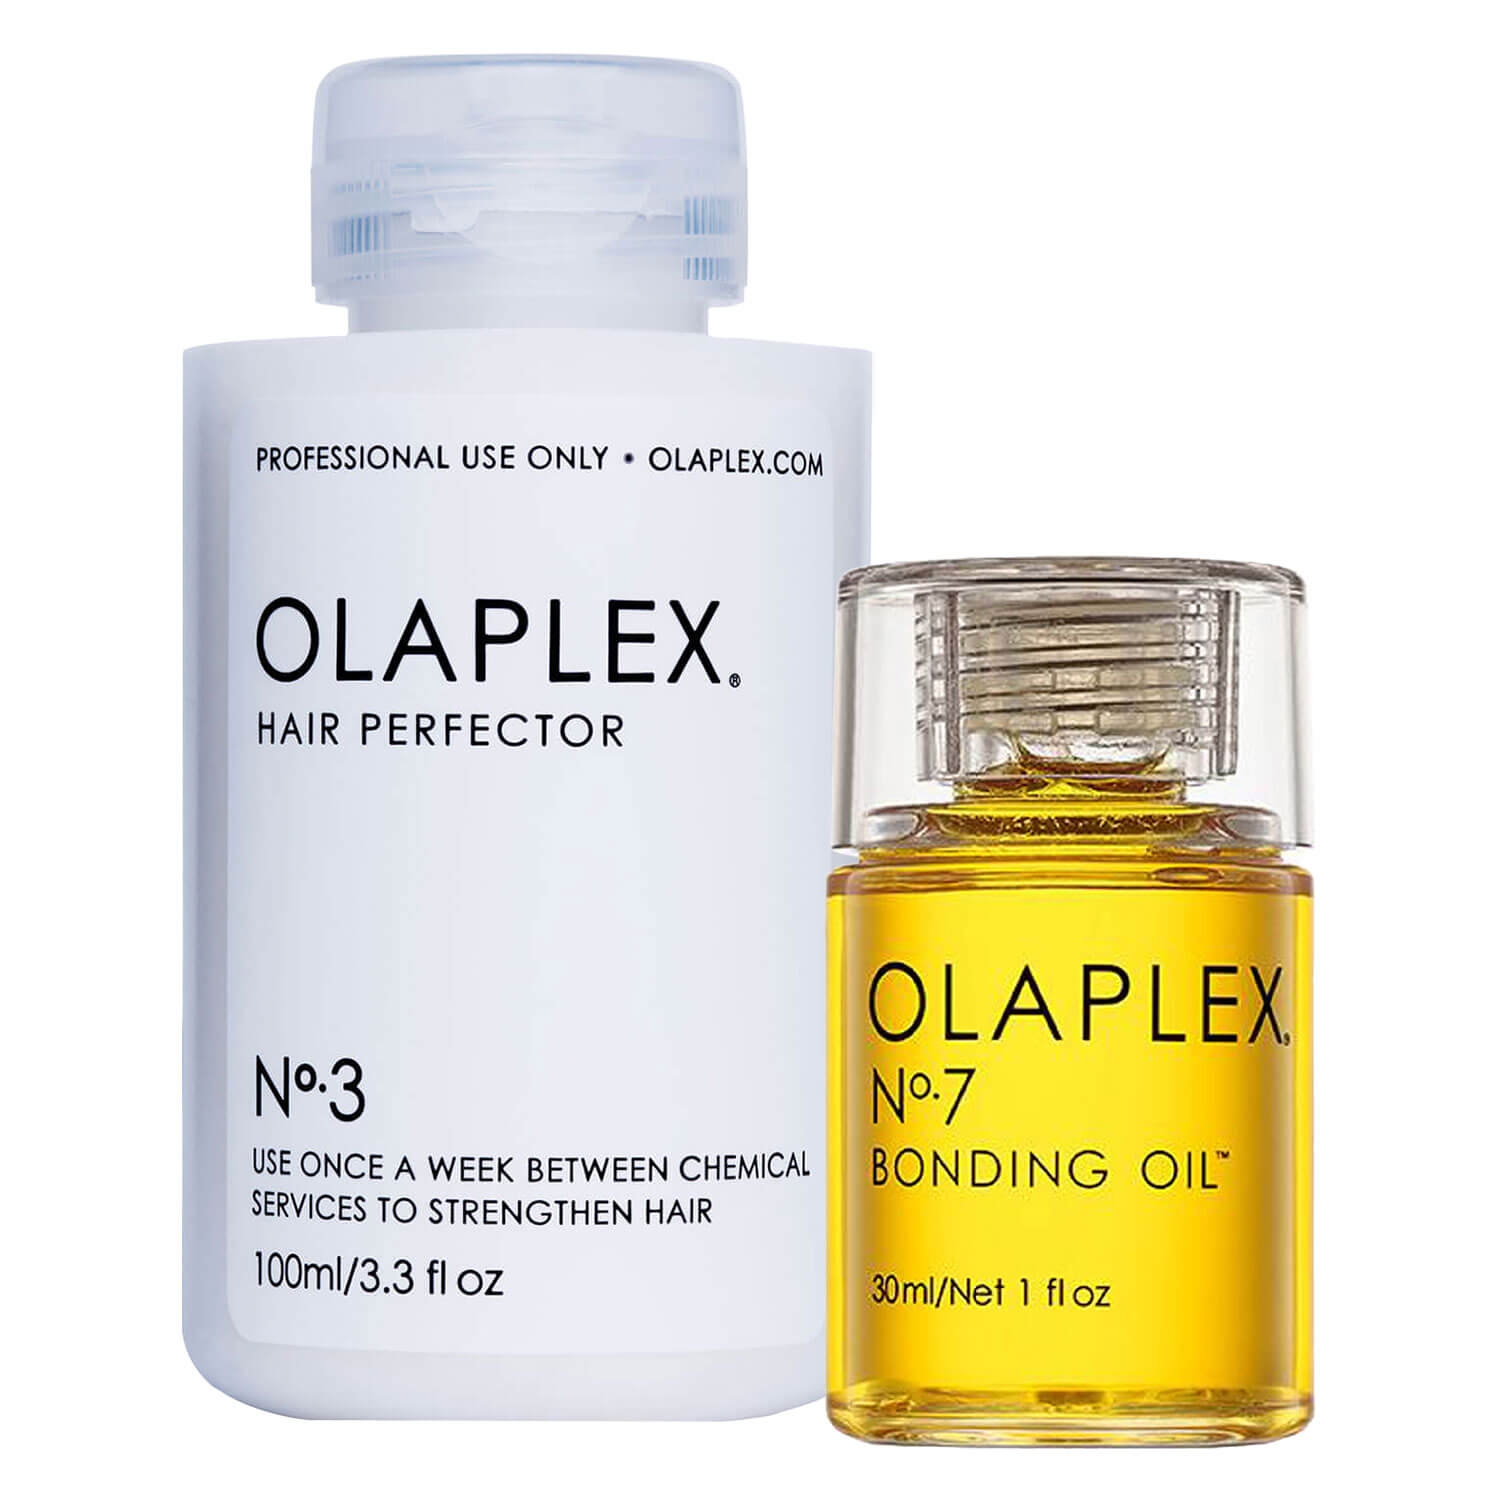 Image du produit de Olaplex - Bonding Oil No. 7 + Olaplex - Hair Perfector No. 3 Special